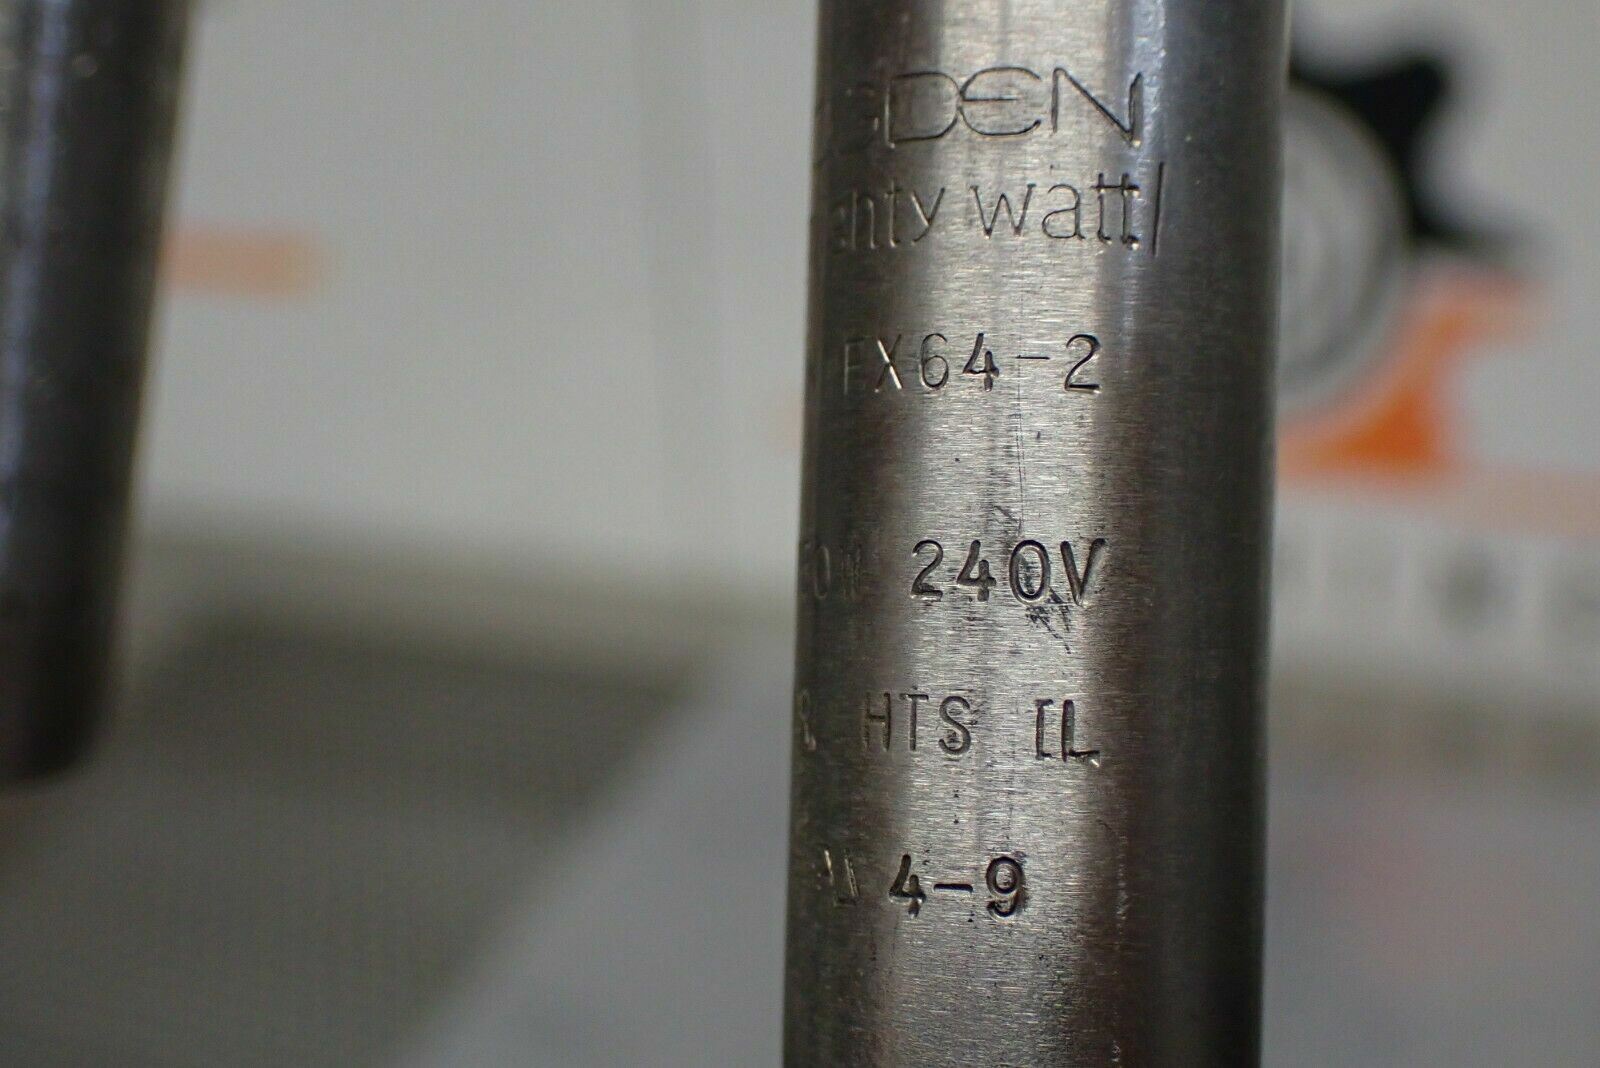 Ogden MWFX64-2 Mighty Watt 750W 240V Heater Cartridges New Old Stock (Lot of 2) Ogden MWFX64-2 - фотография #9